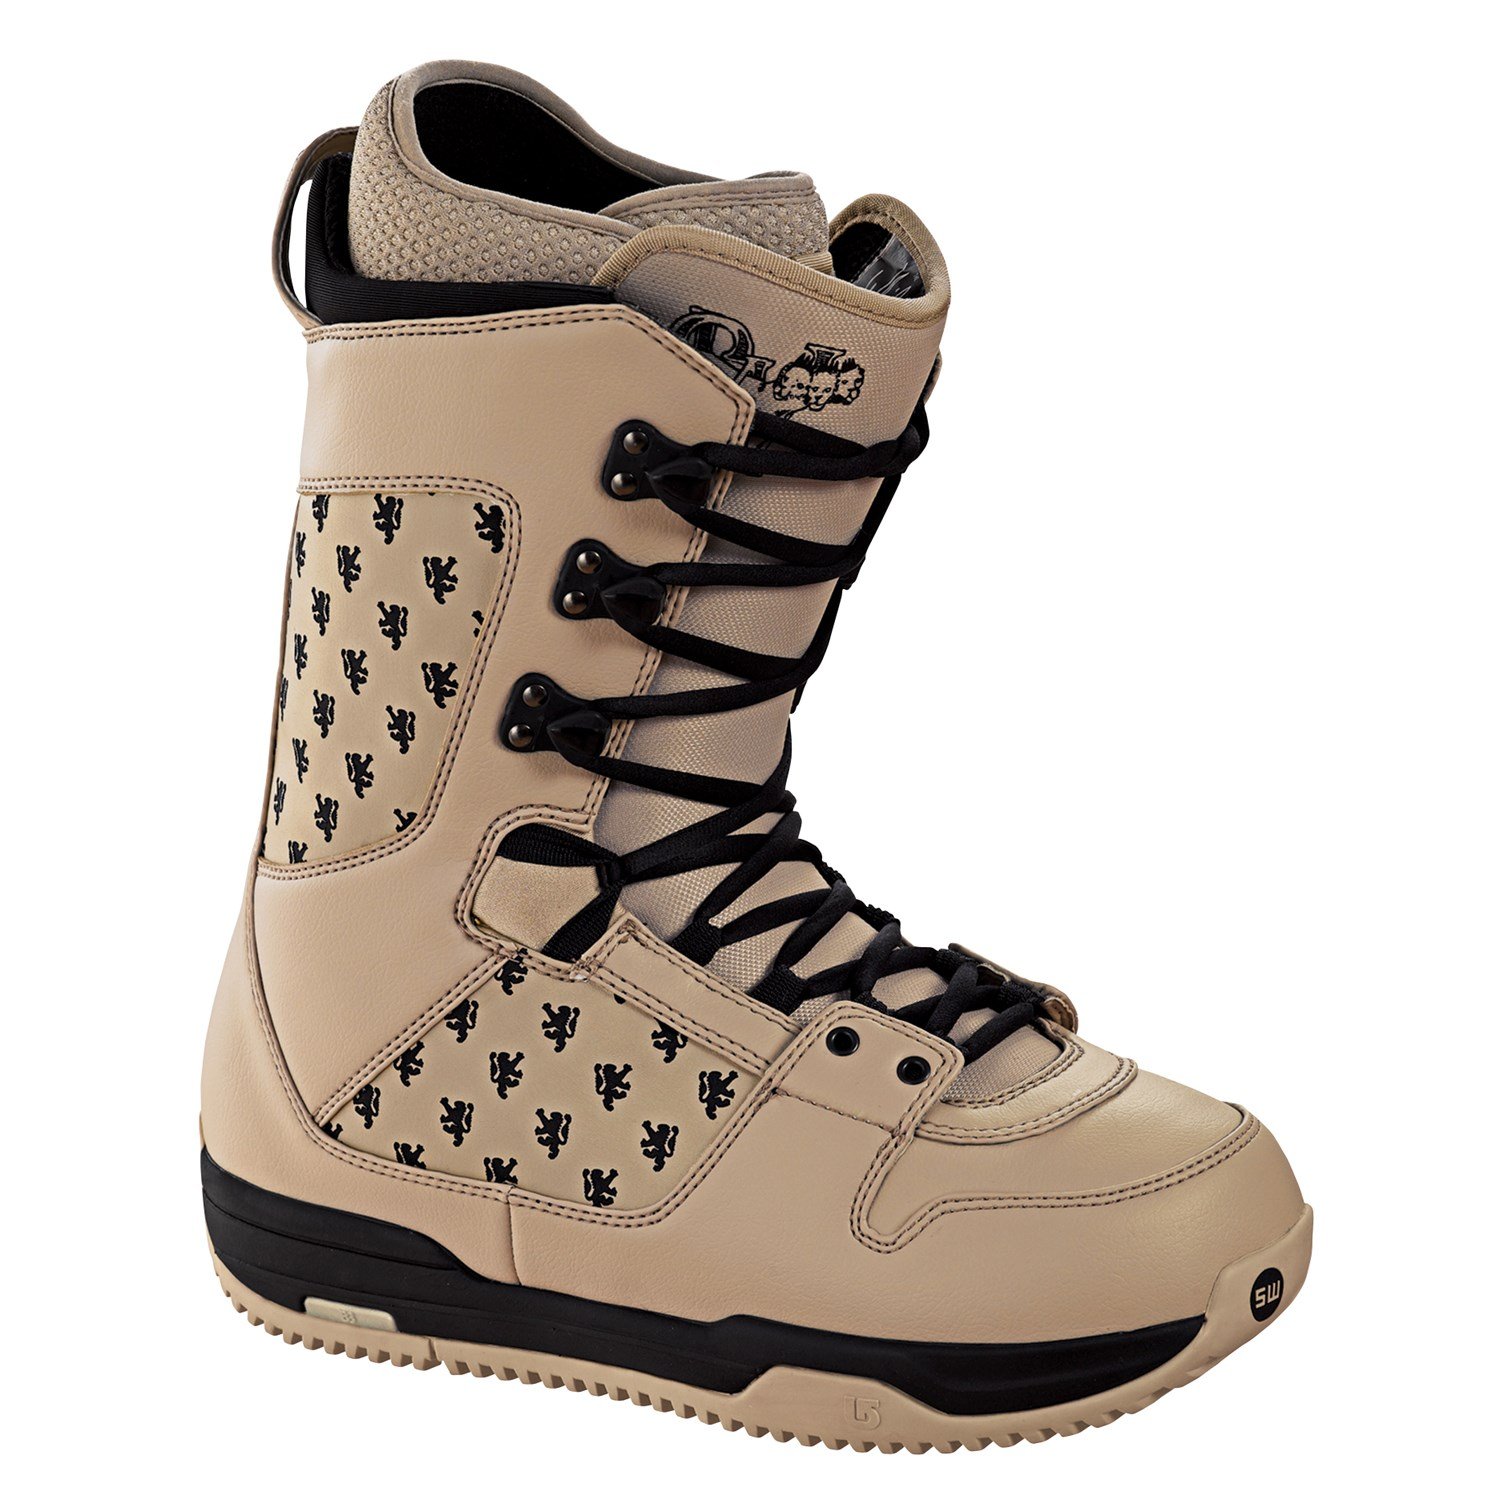 NEW! $280 Burton Shaun White Snowboard Boots! US 6 UK 5 Mondo 24 Euro 38  Brown